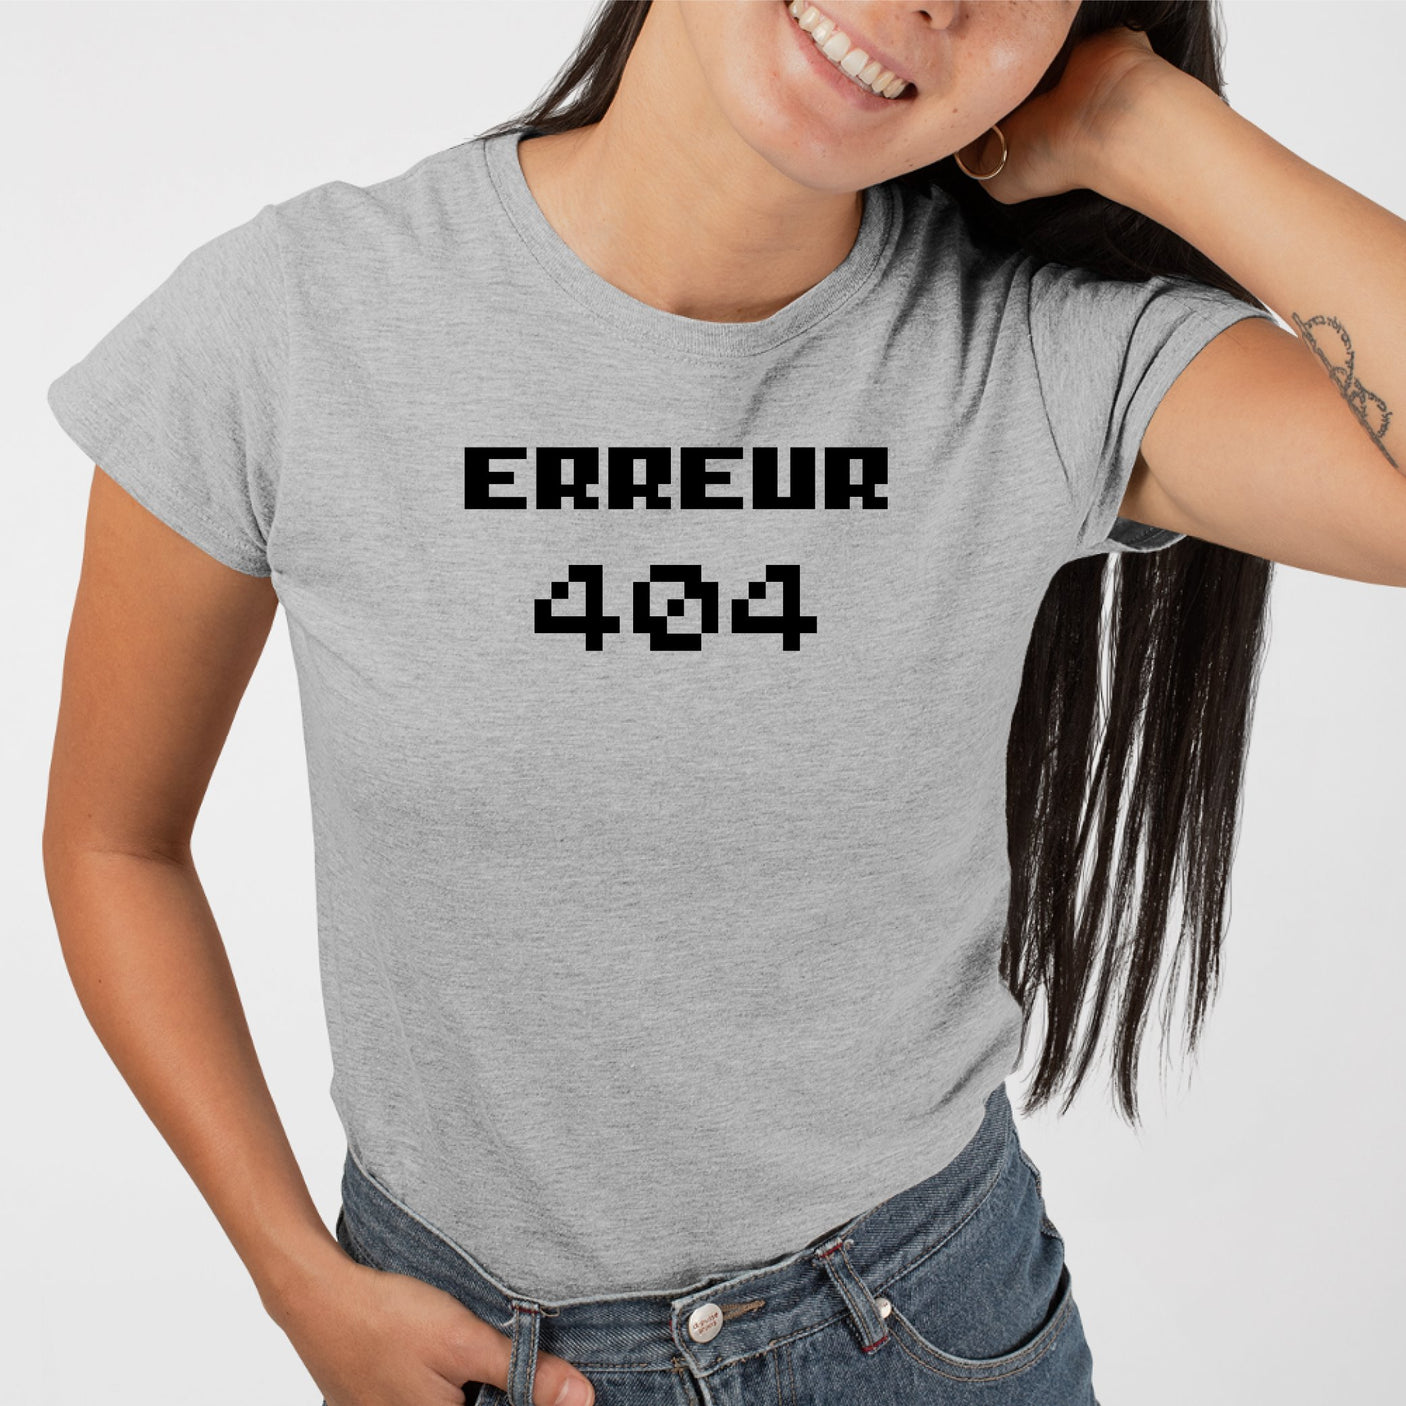 T-Shirt Femme Erreur 404 Gris